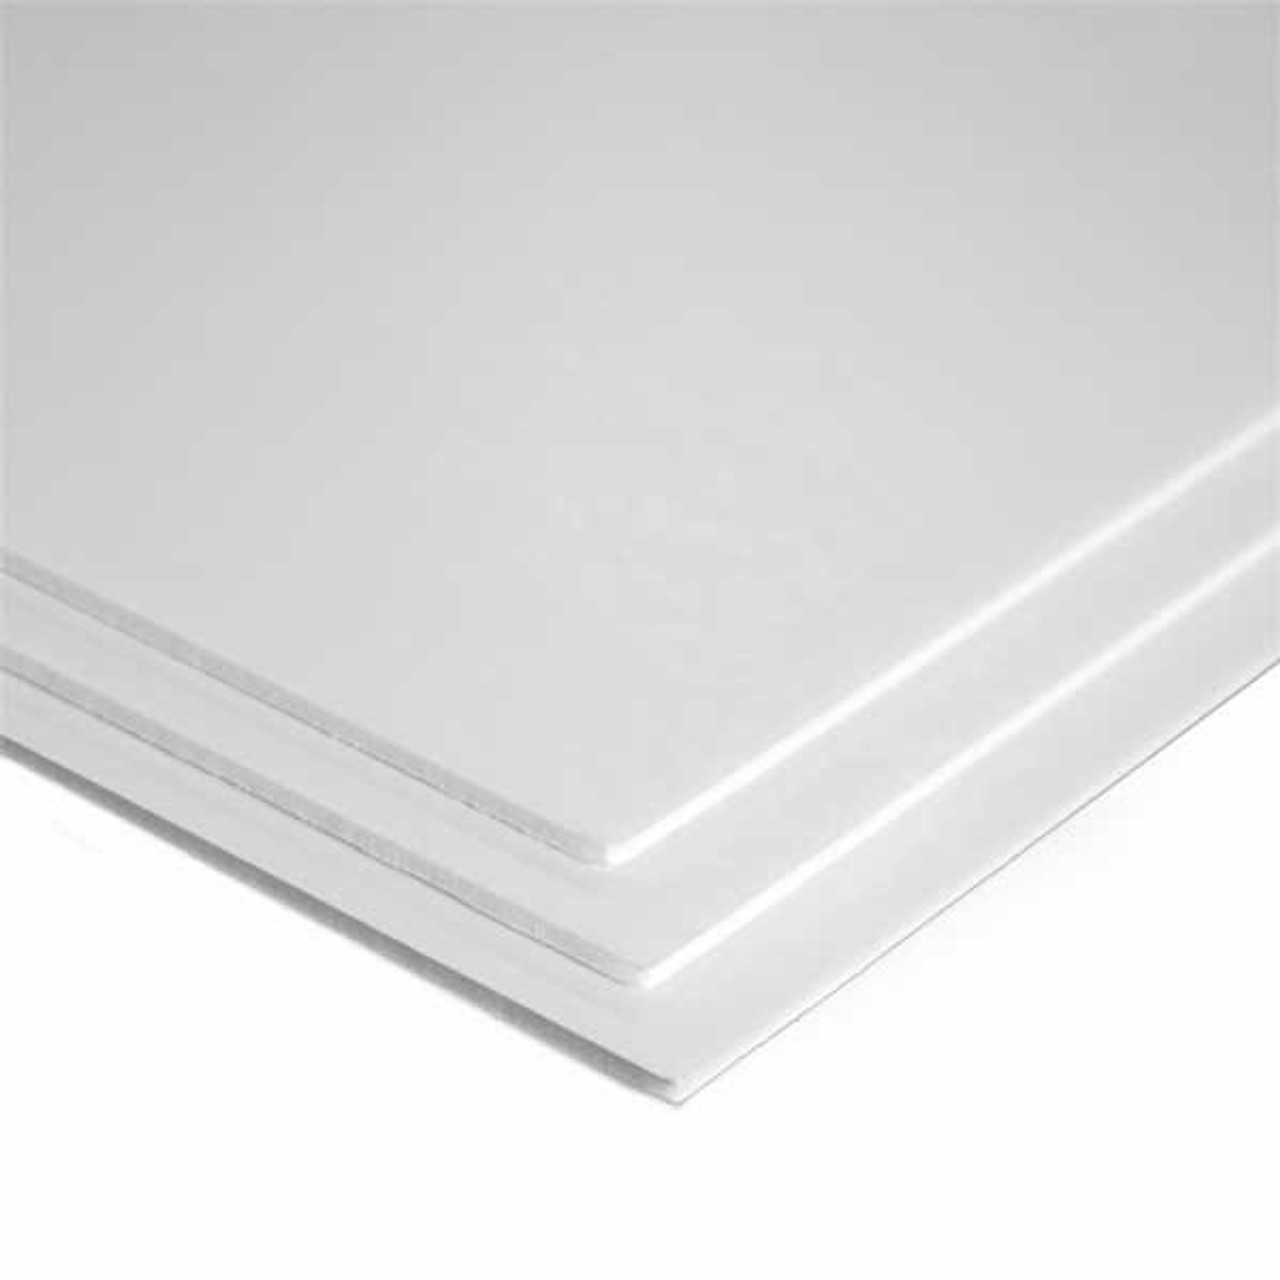 48 x 96 / 4ft x 8ft – 10mm White Foamboard (13 Sheets)